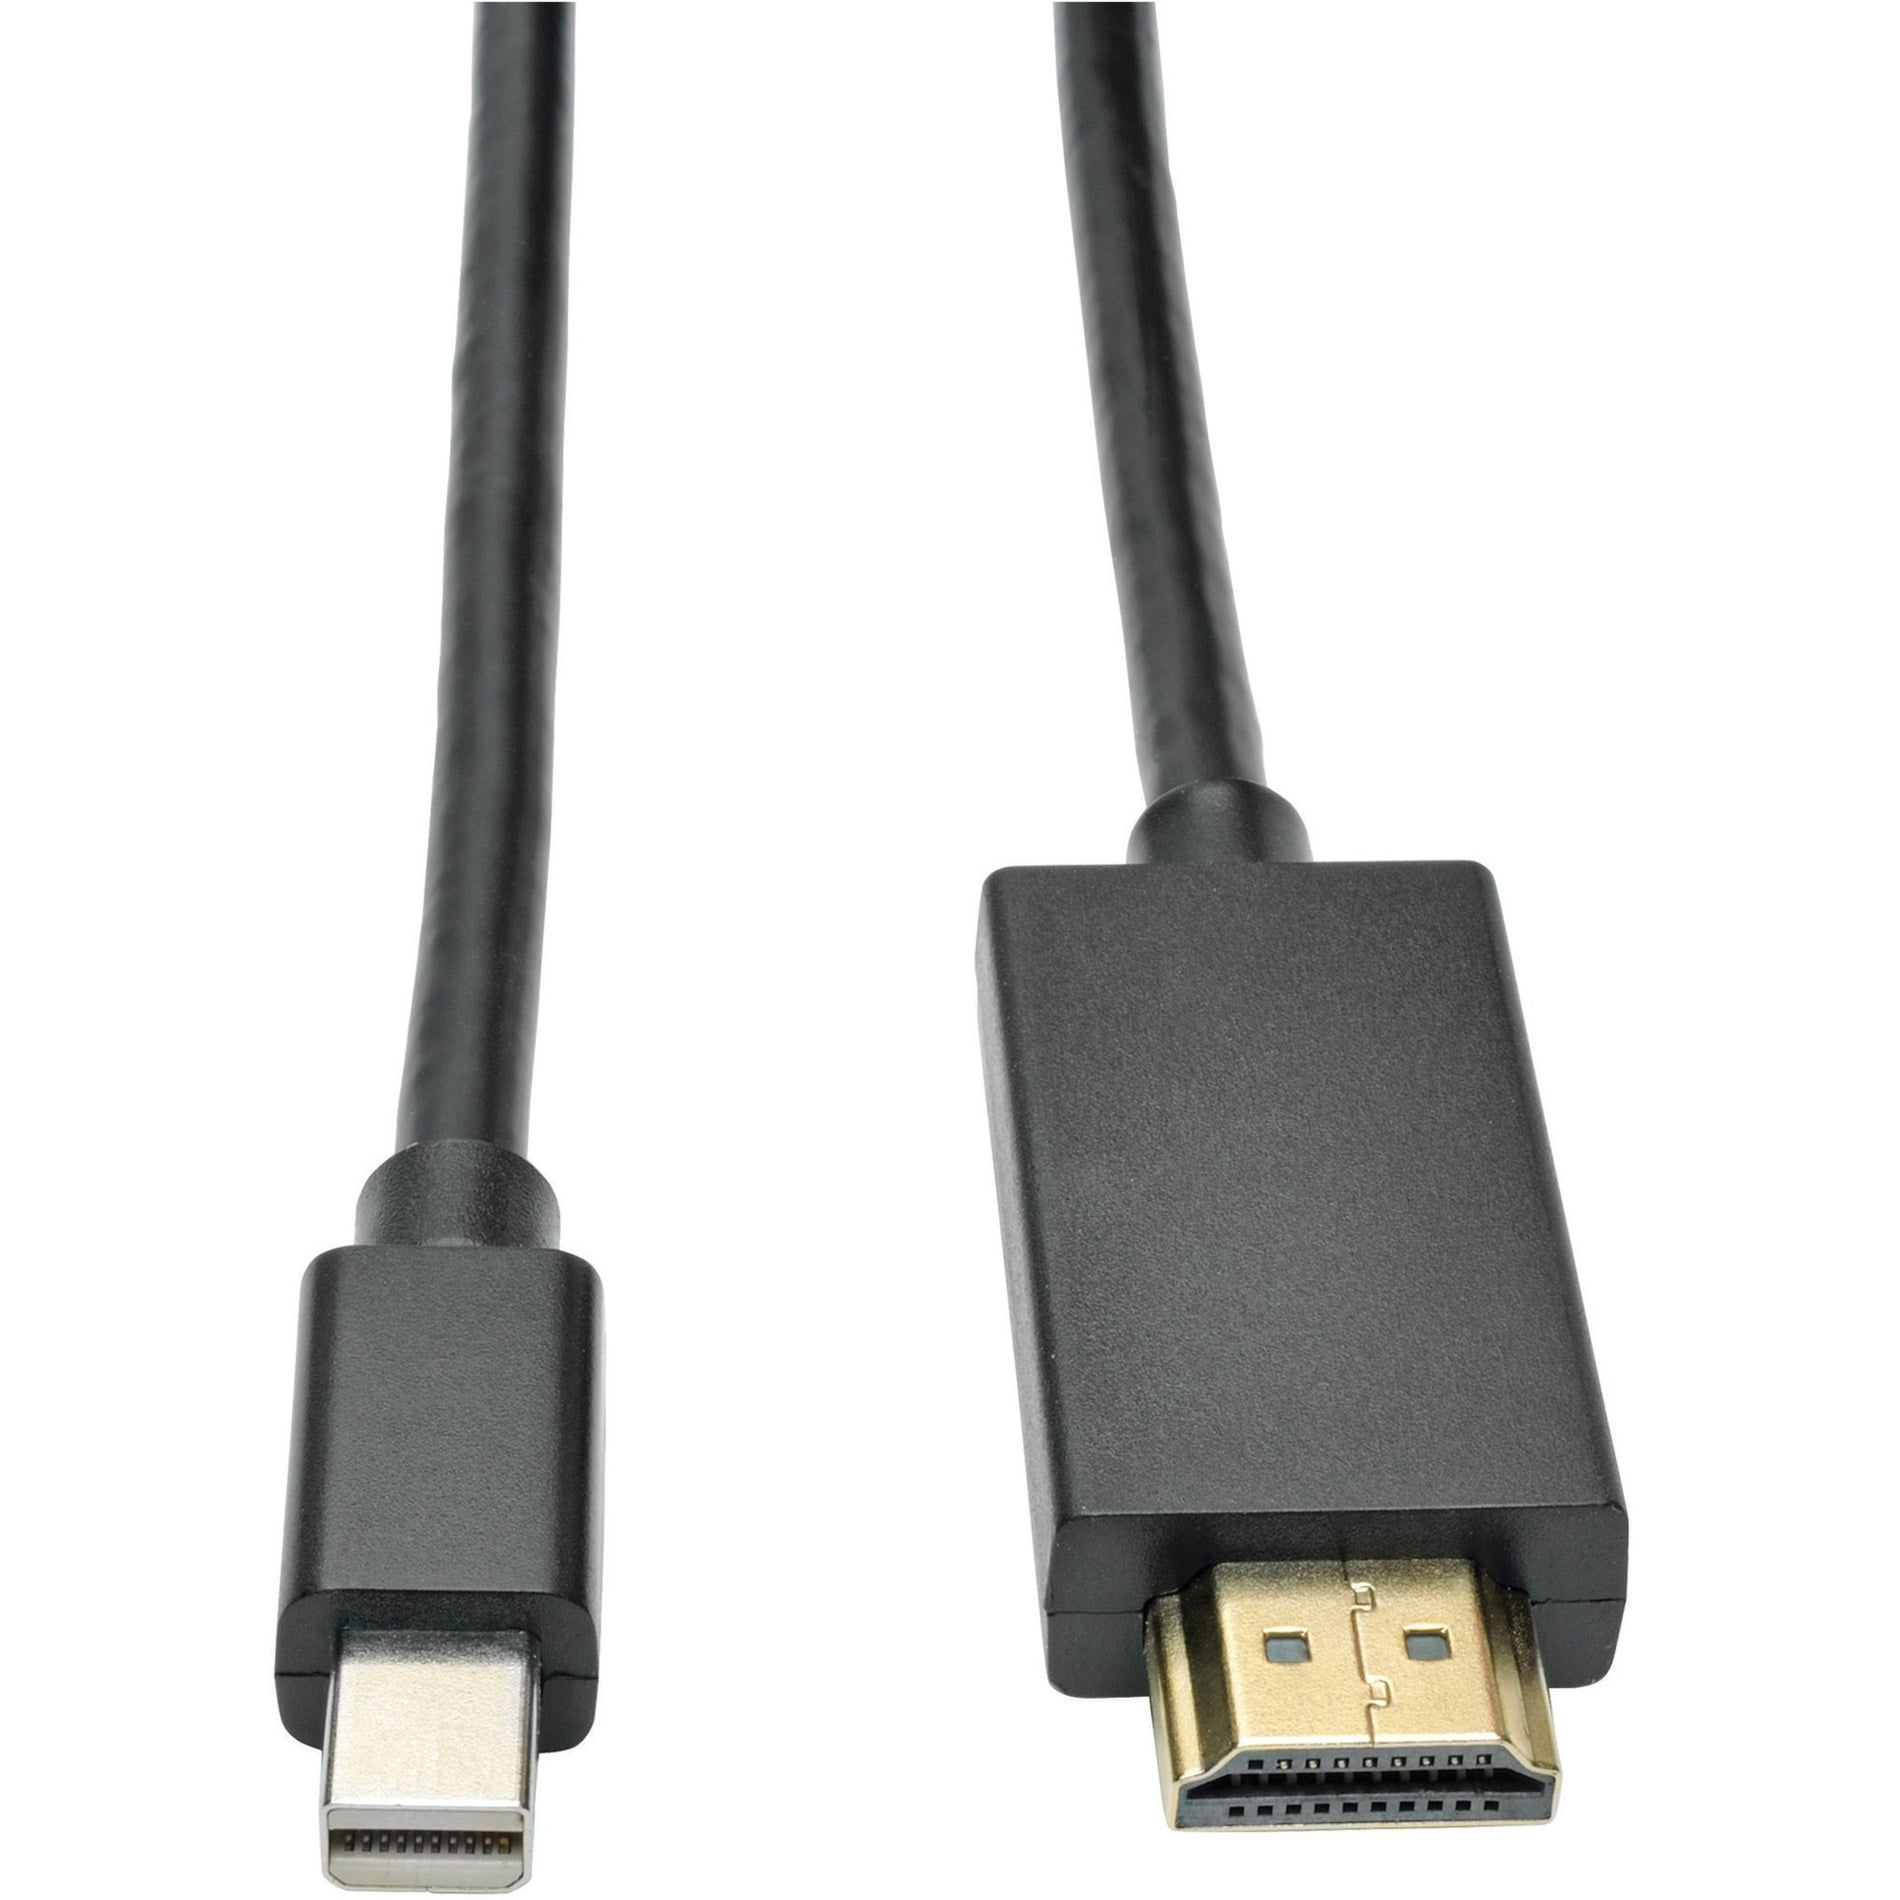 Tripp Lite P586-006-HDMI Mini DisplayPort to HD Cable Adapter, 6ft, Black